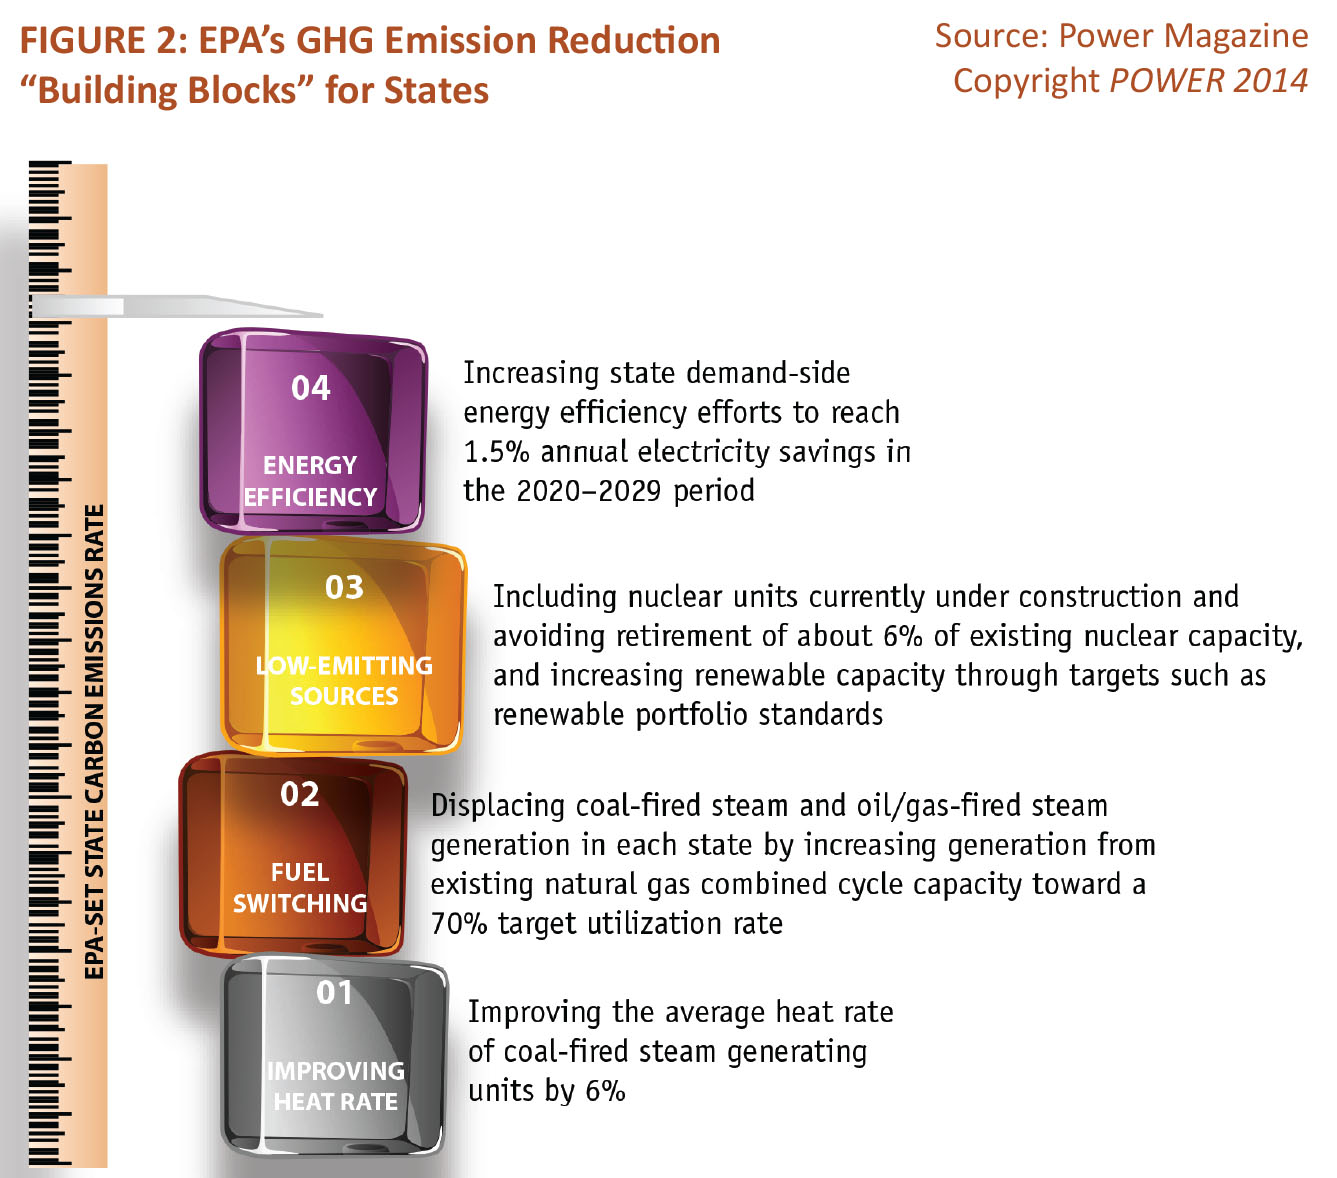 EPA's GHG Emission Reduction 'Building Blocks' for States